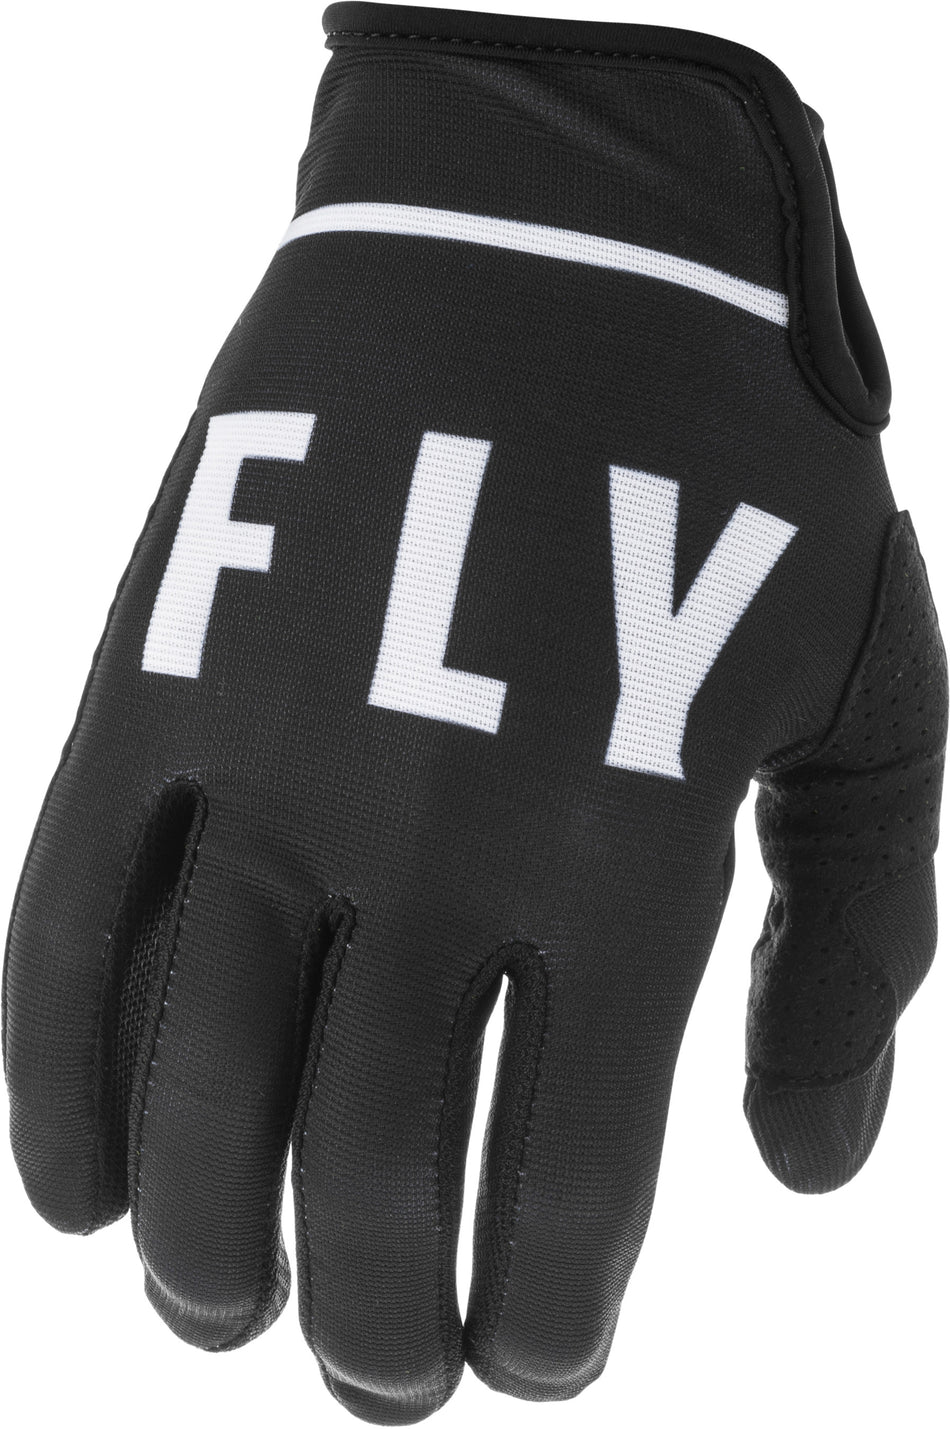 FLY RACING Lite Gloves Black/White Sz 05 373-71105